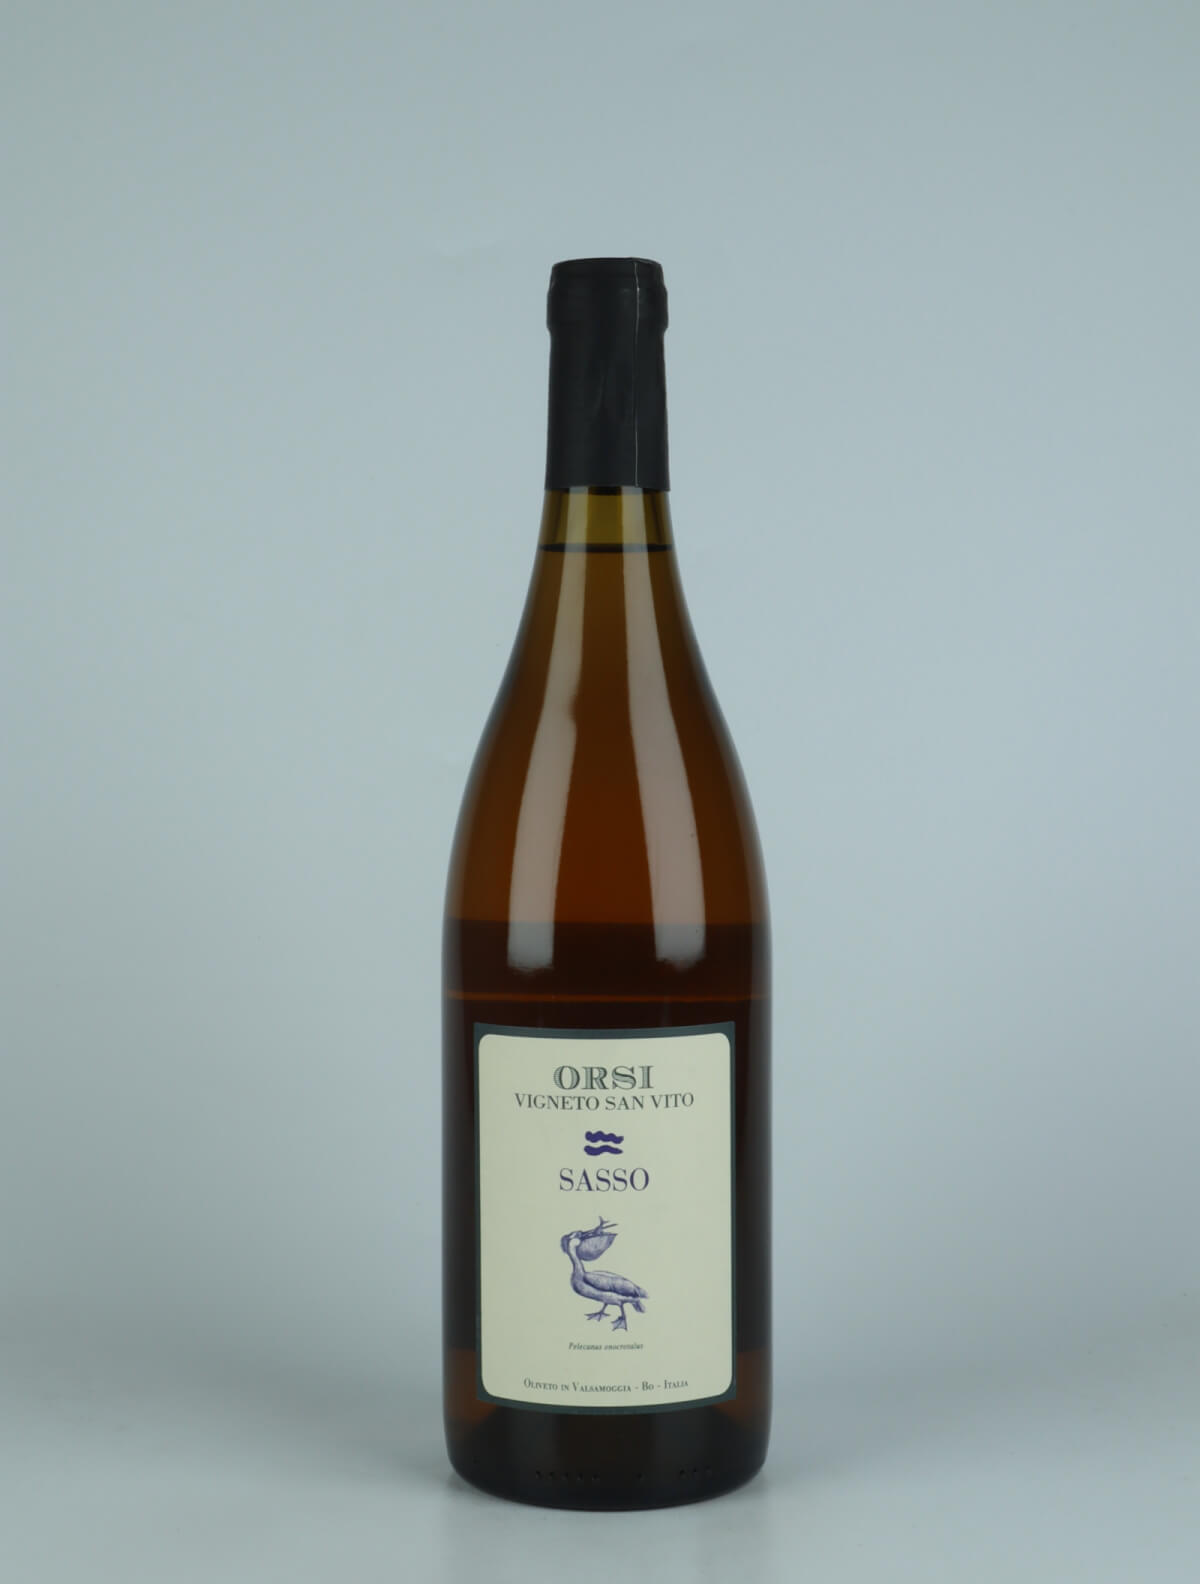 En flaske 2022 Sasso Orange vin fra Orsi - San Vito, Emilia-Romagna i Italien